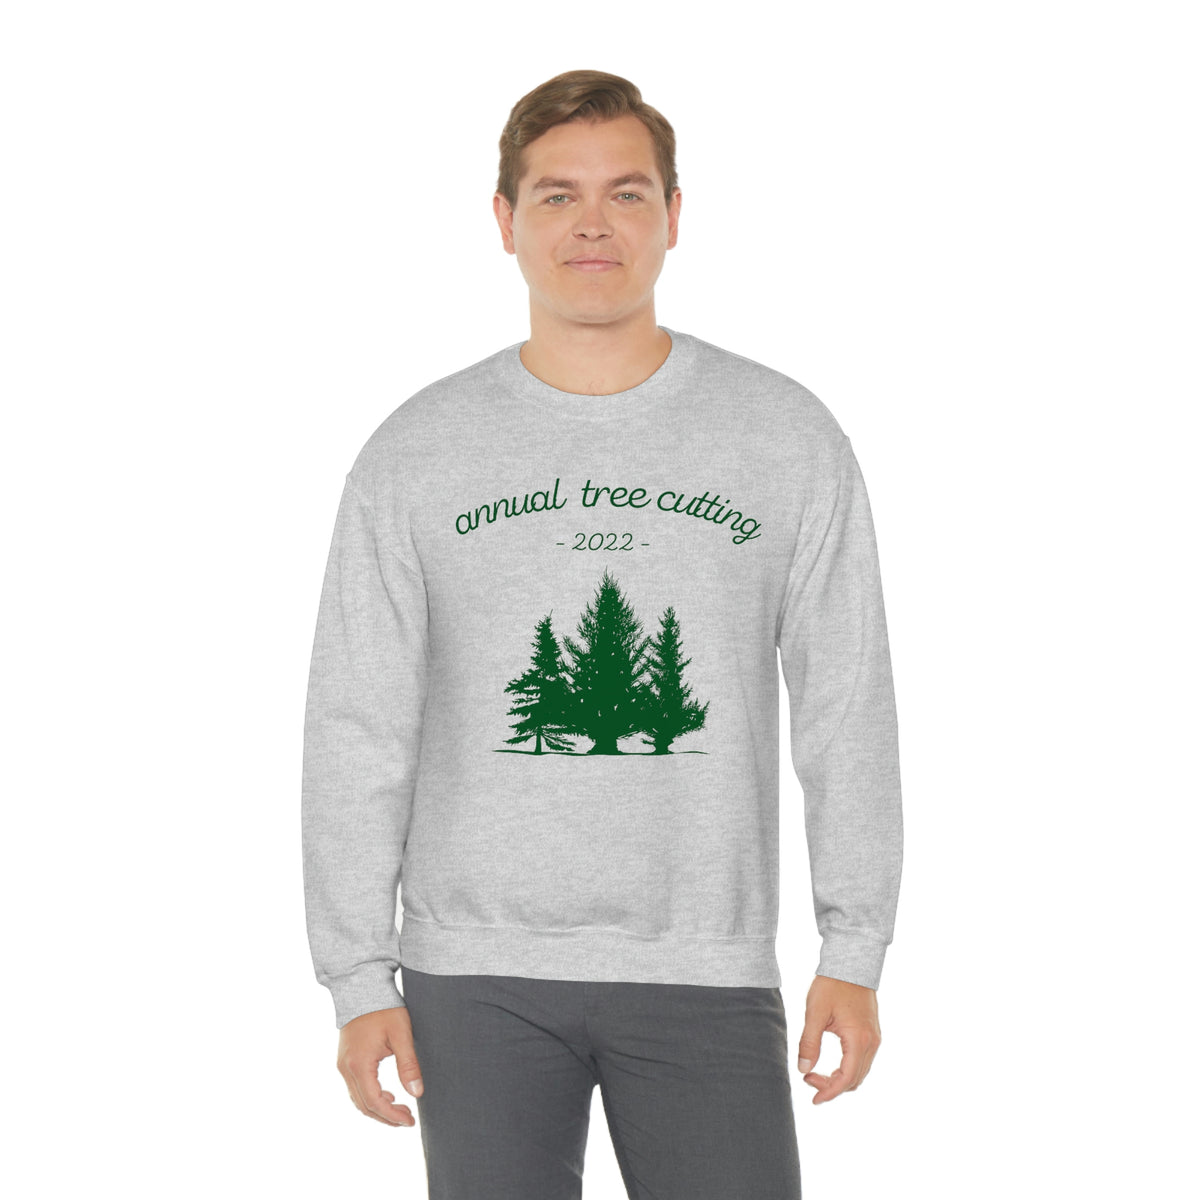 Christmas Tree sweatshirt, Christmas Tree shirt, Christmas tree cutting shirt, Family tradition shirt, holiday sweatshirt